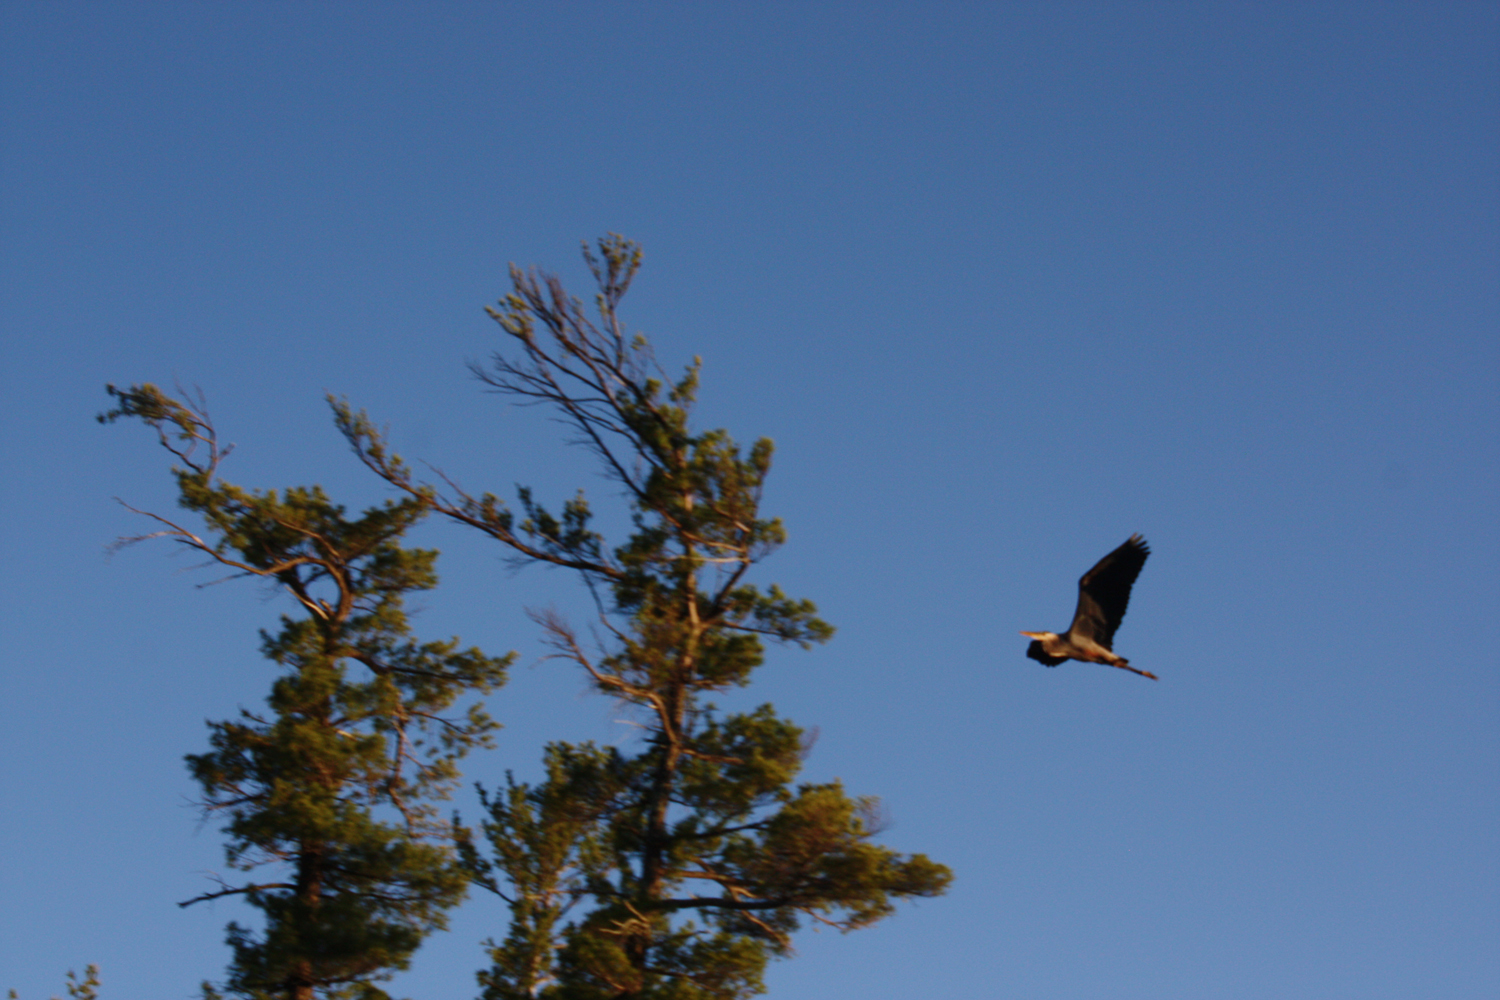 A massive blue heron glides overhead.